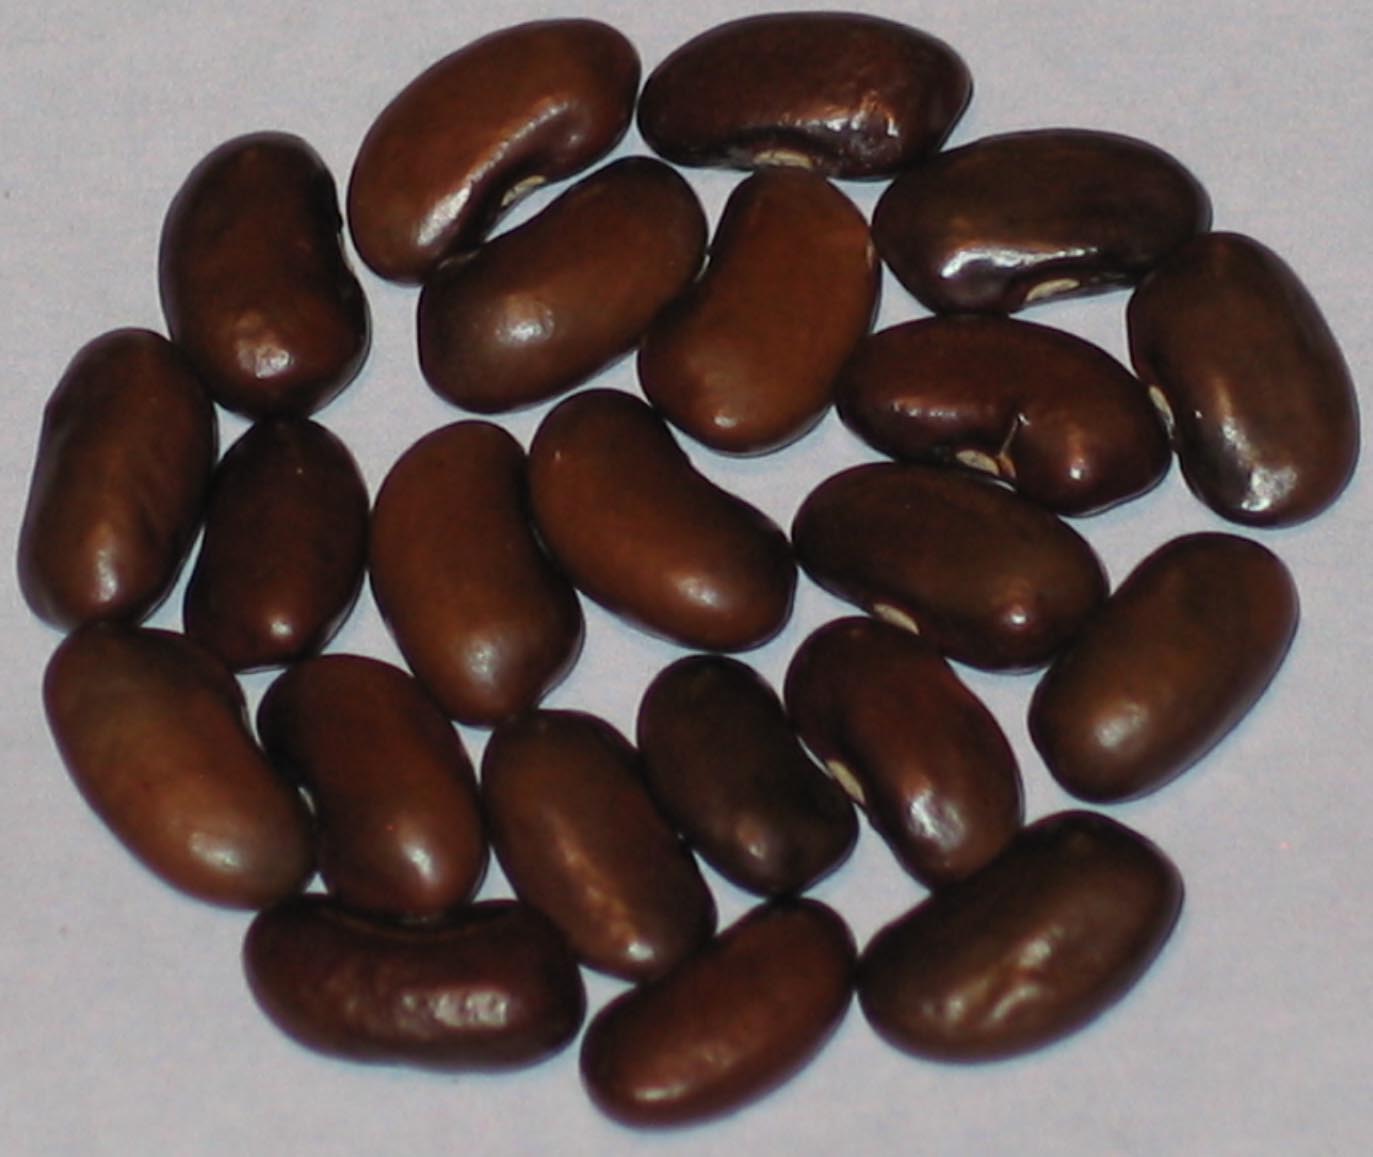 image of Connecticut wonder beans